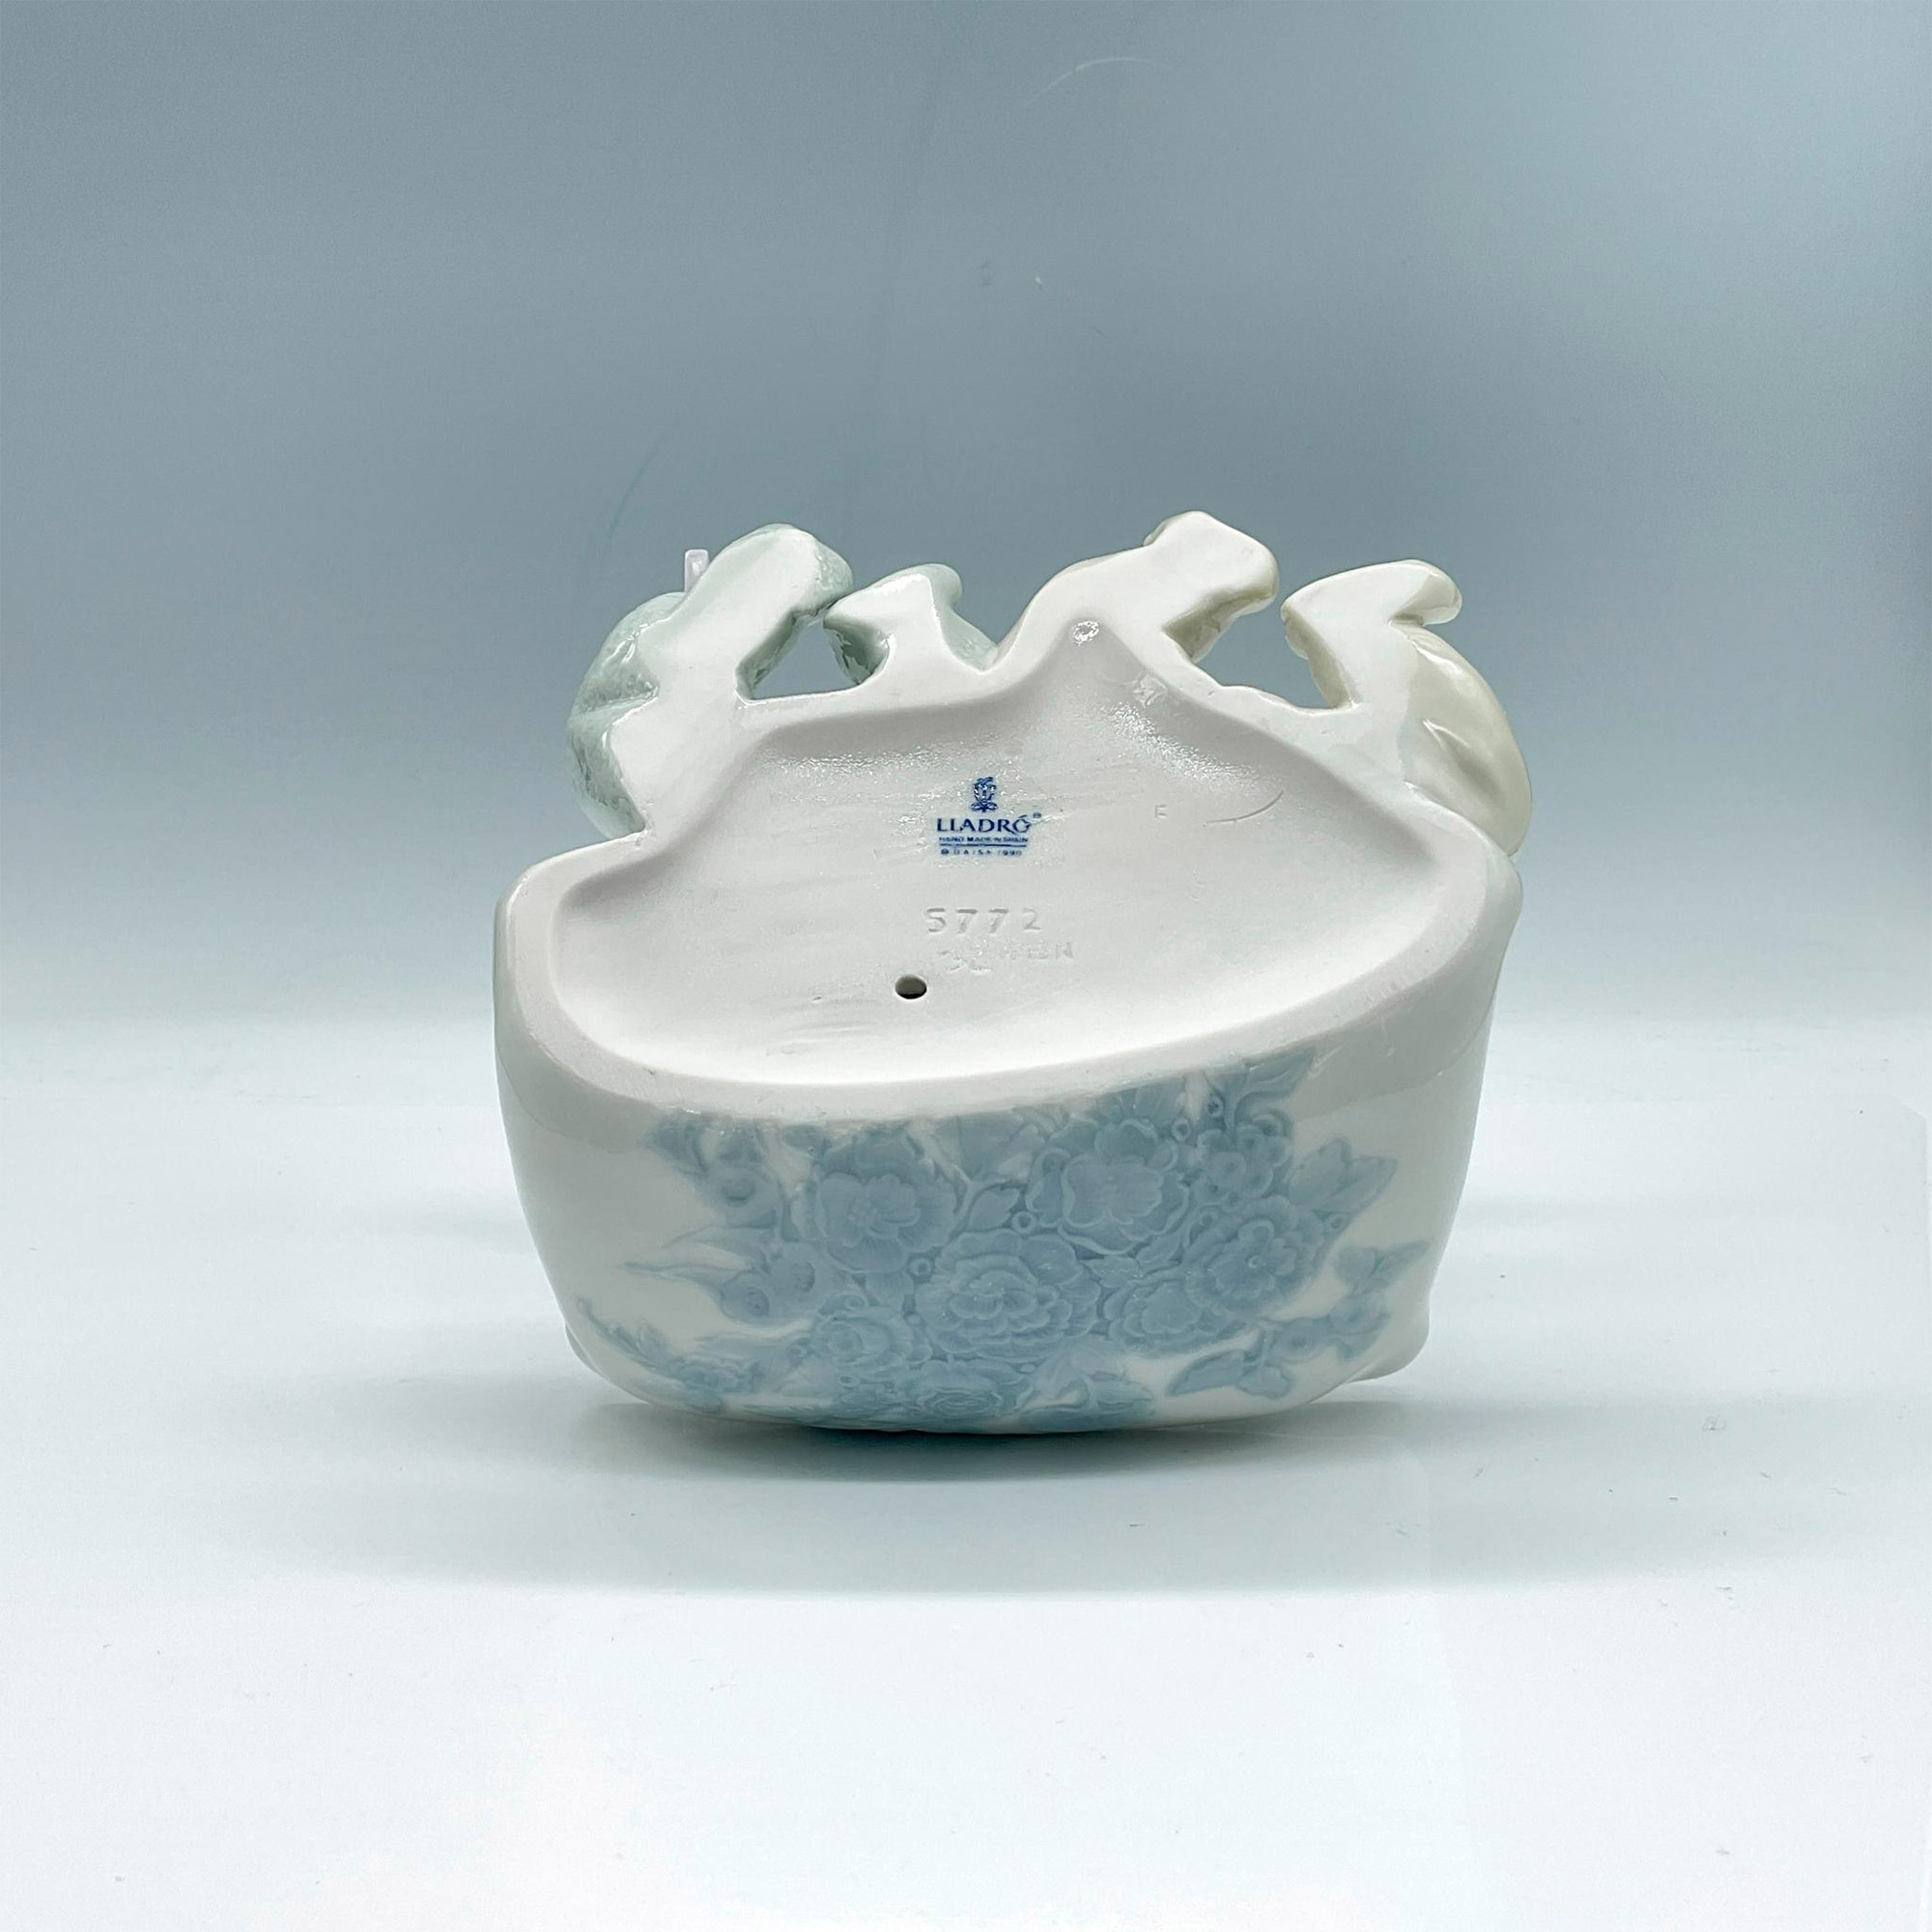 Little Dreamers 1005772 - Lladro Porcelain Figurine - Image 3 of 3